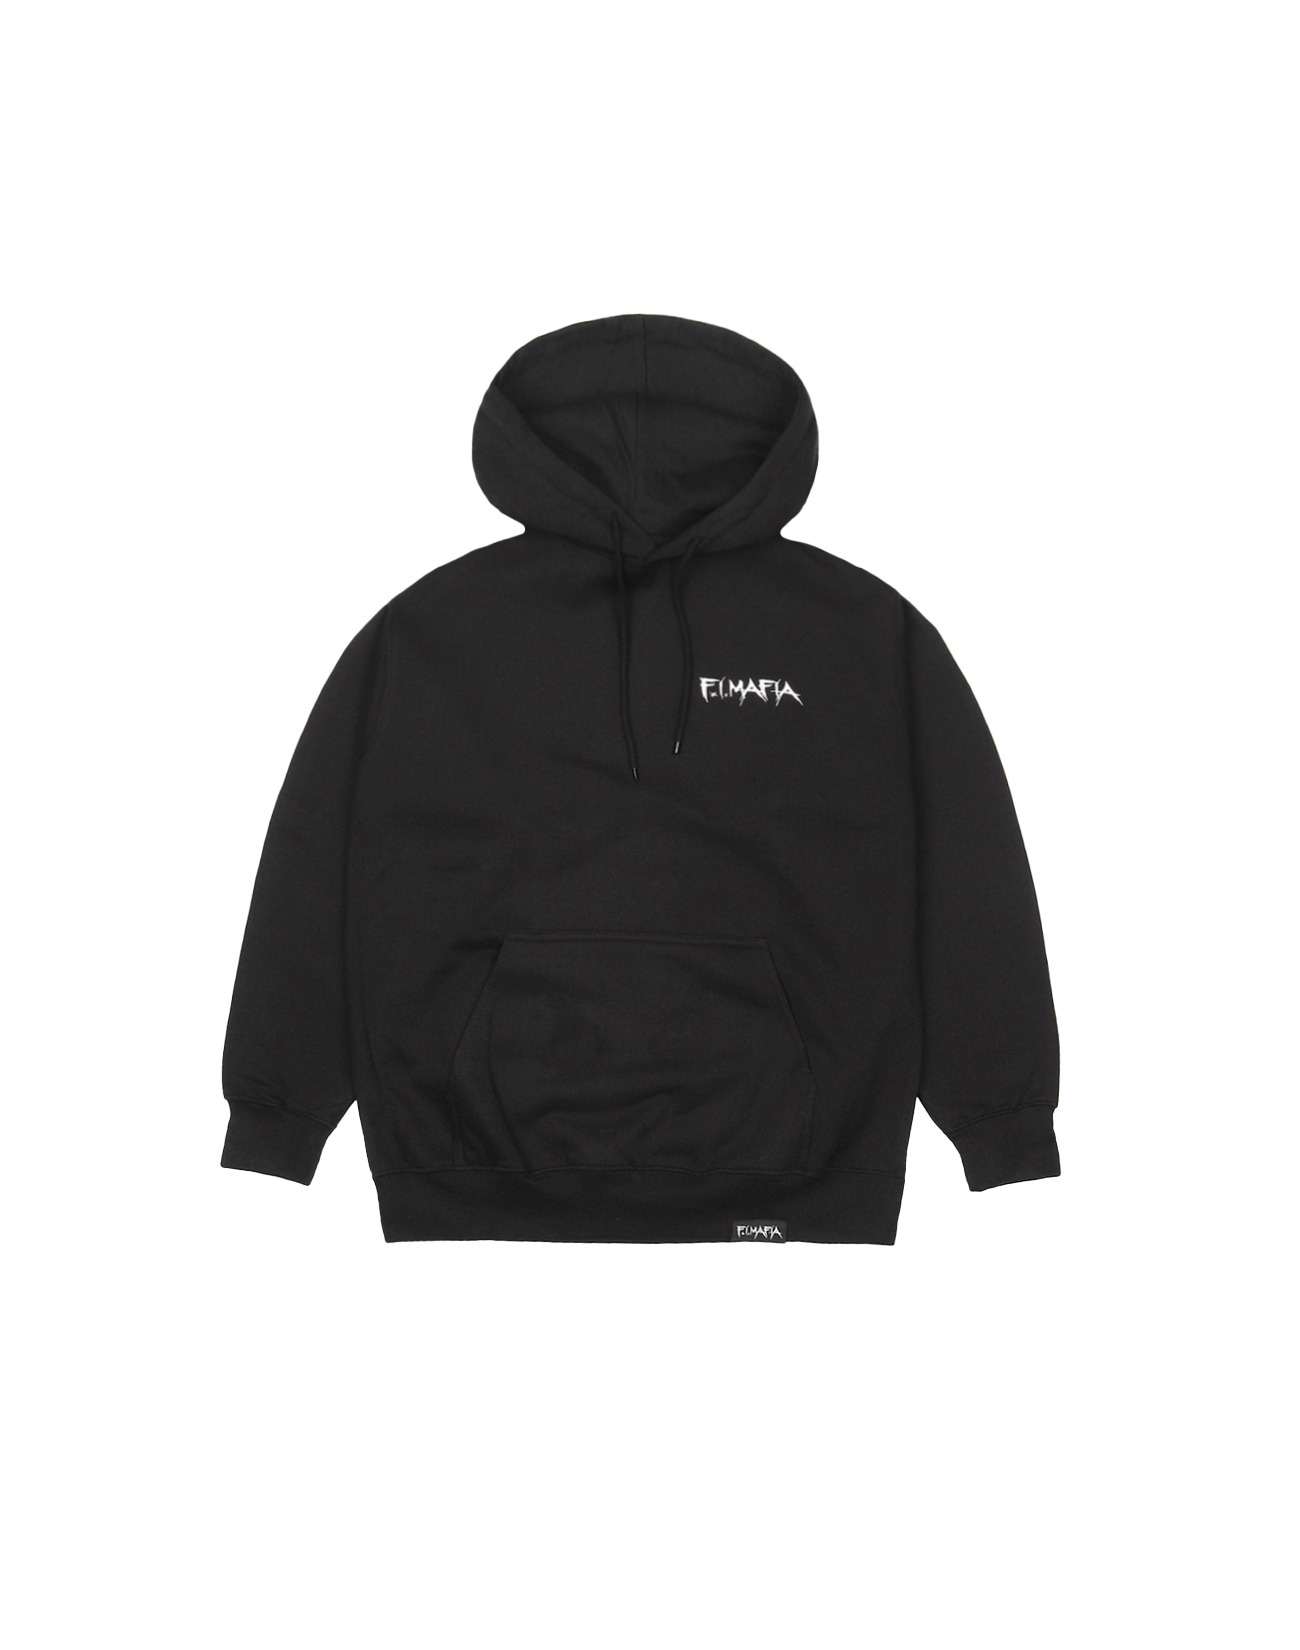 MAF hoodie black, F.I.MAFIA, FIMAFIA, SNOWBOARD, 스노우보드